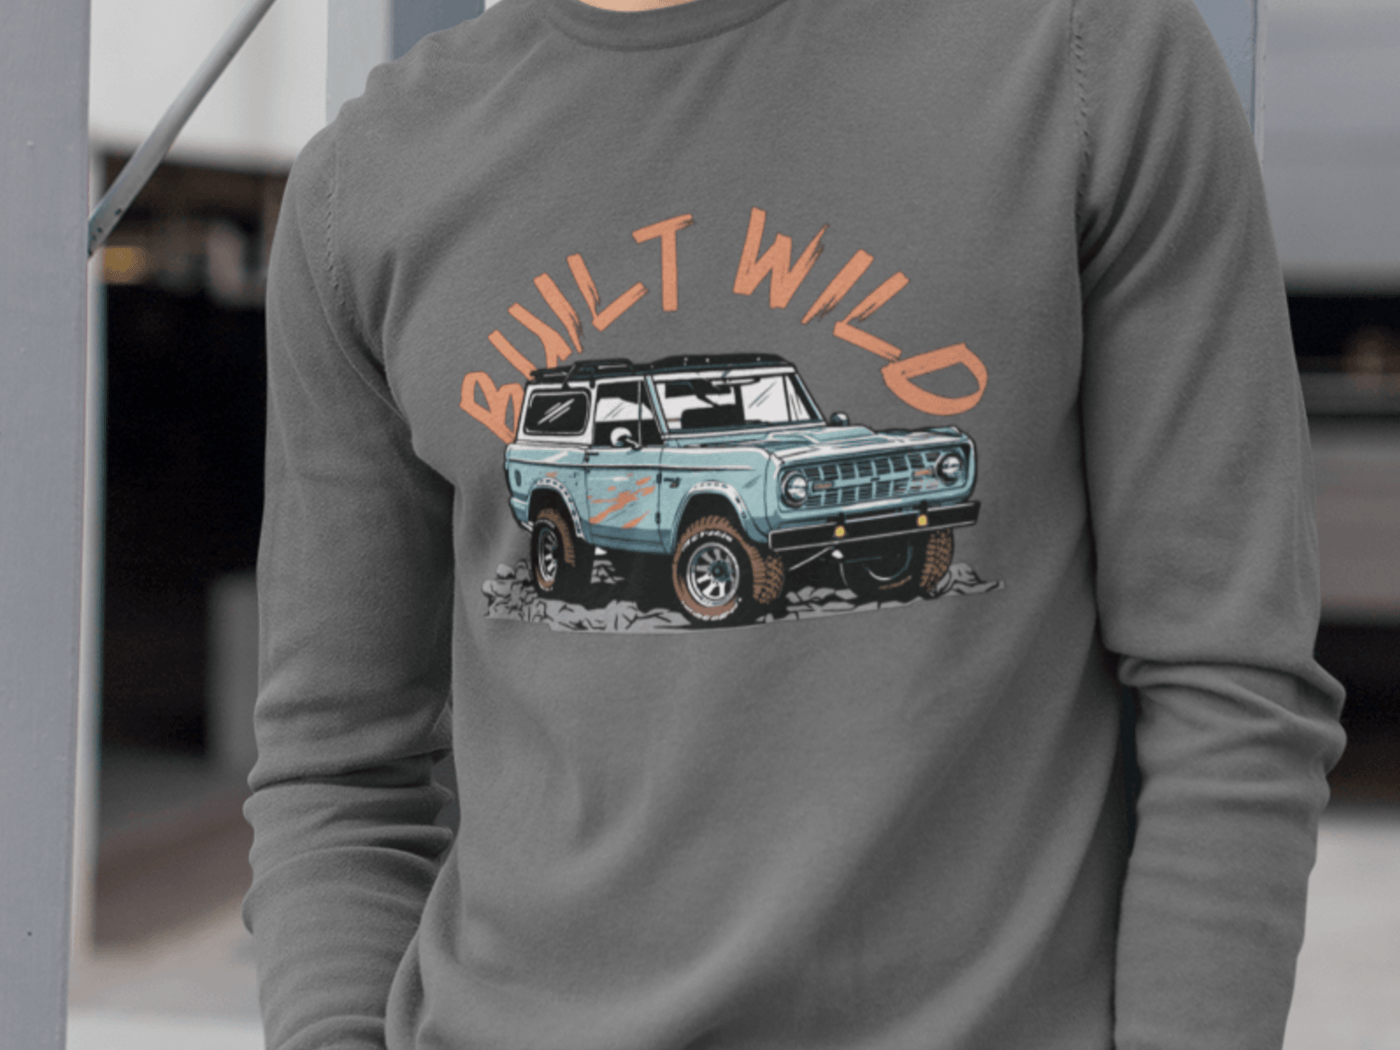 Built Wild Bronco Sweatshirt - Goats Trail